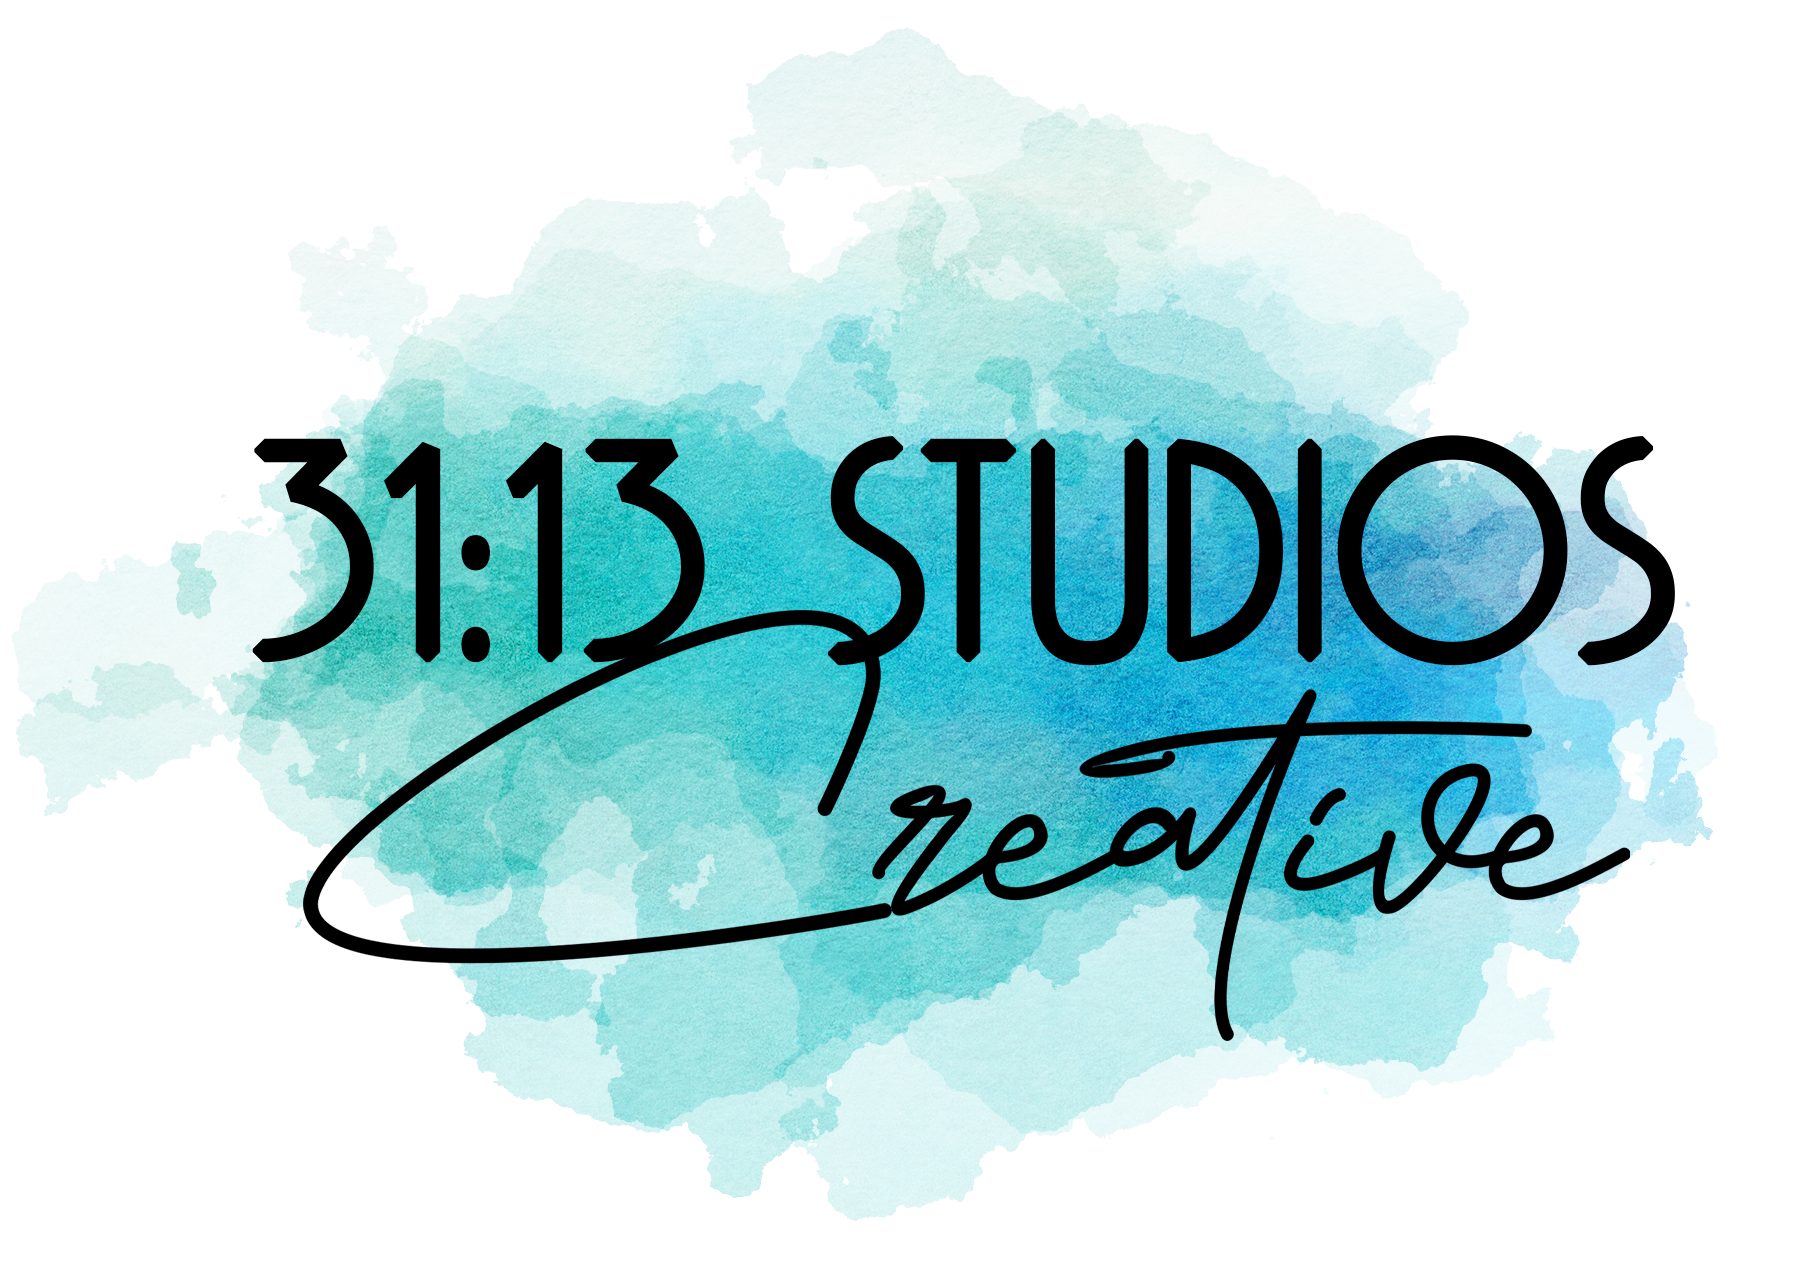 31:13 Studios